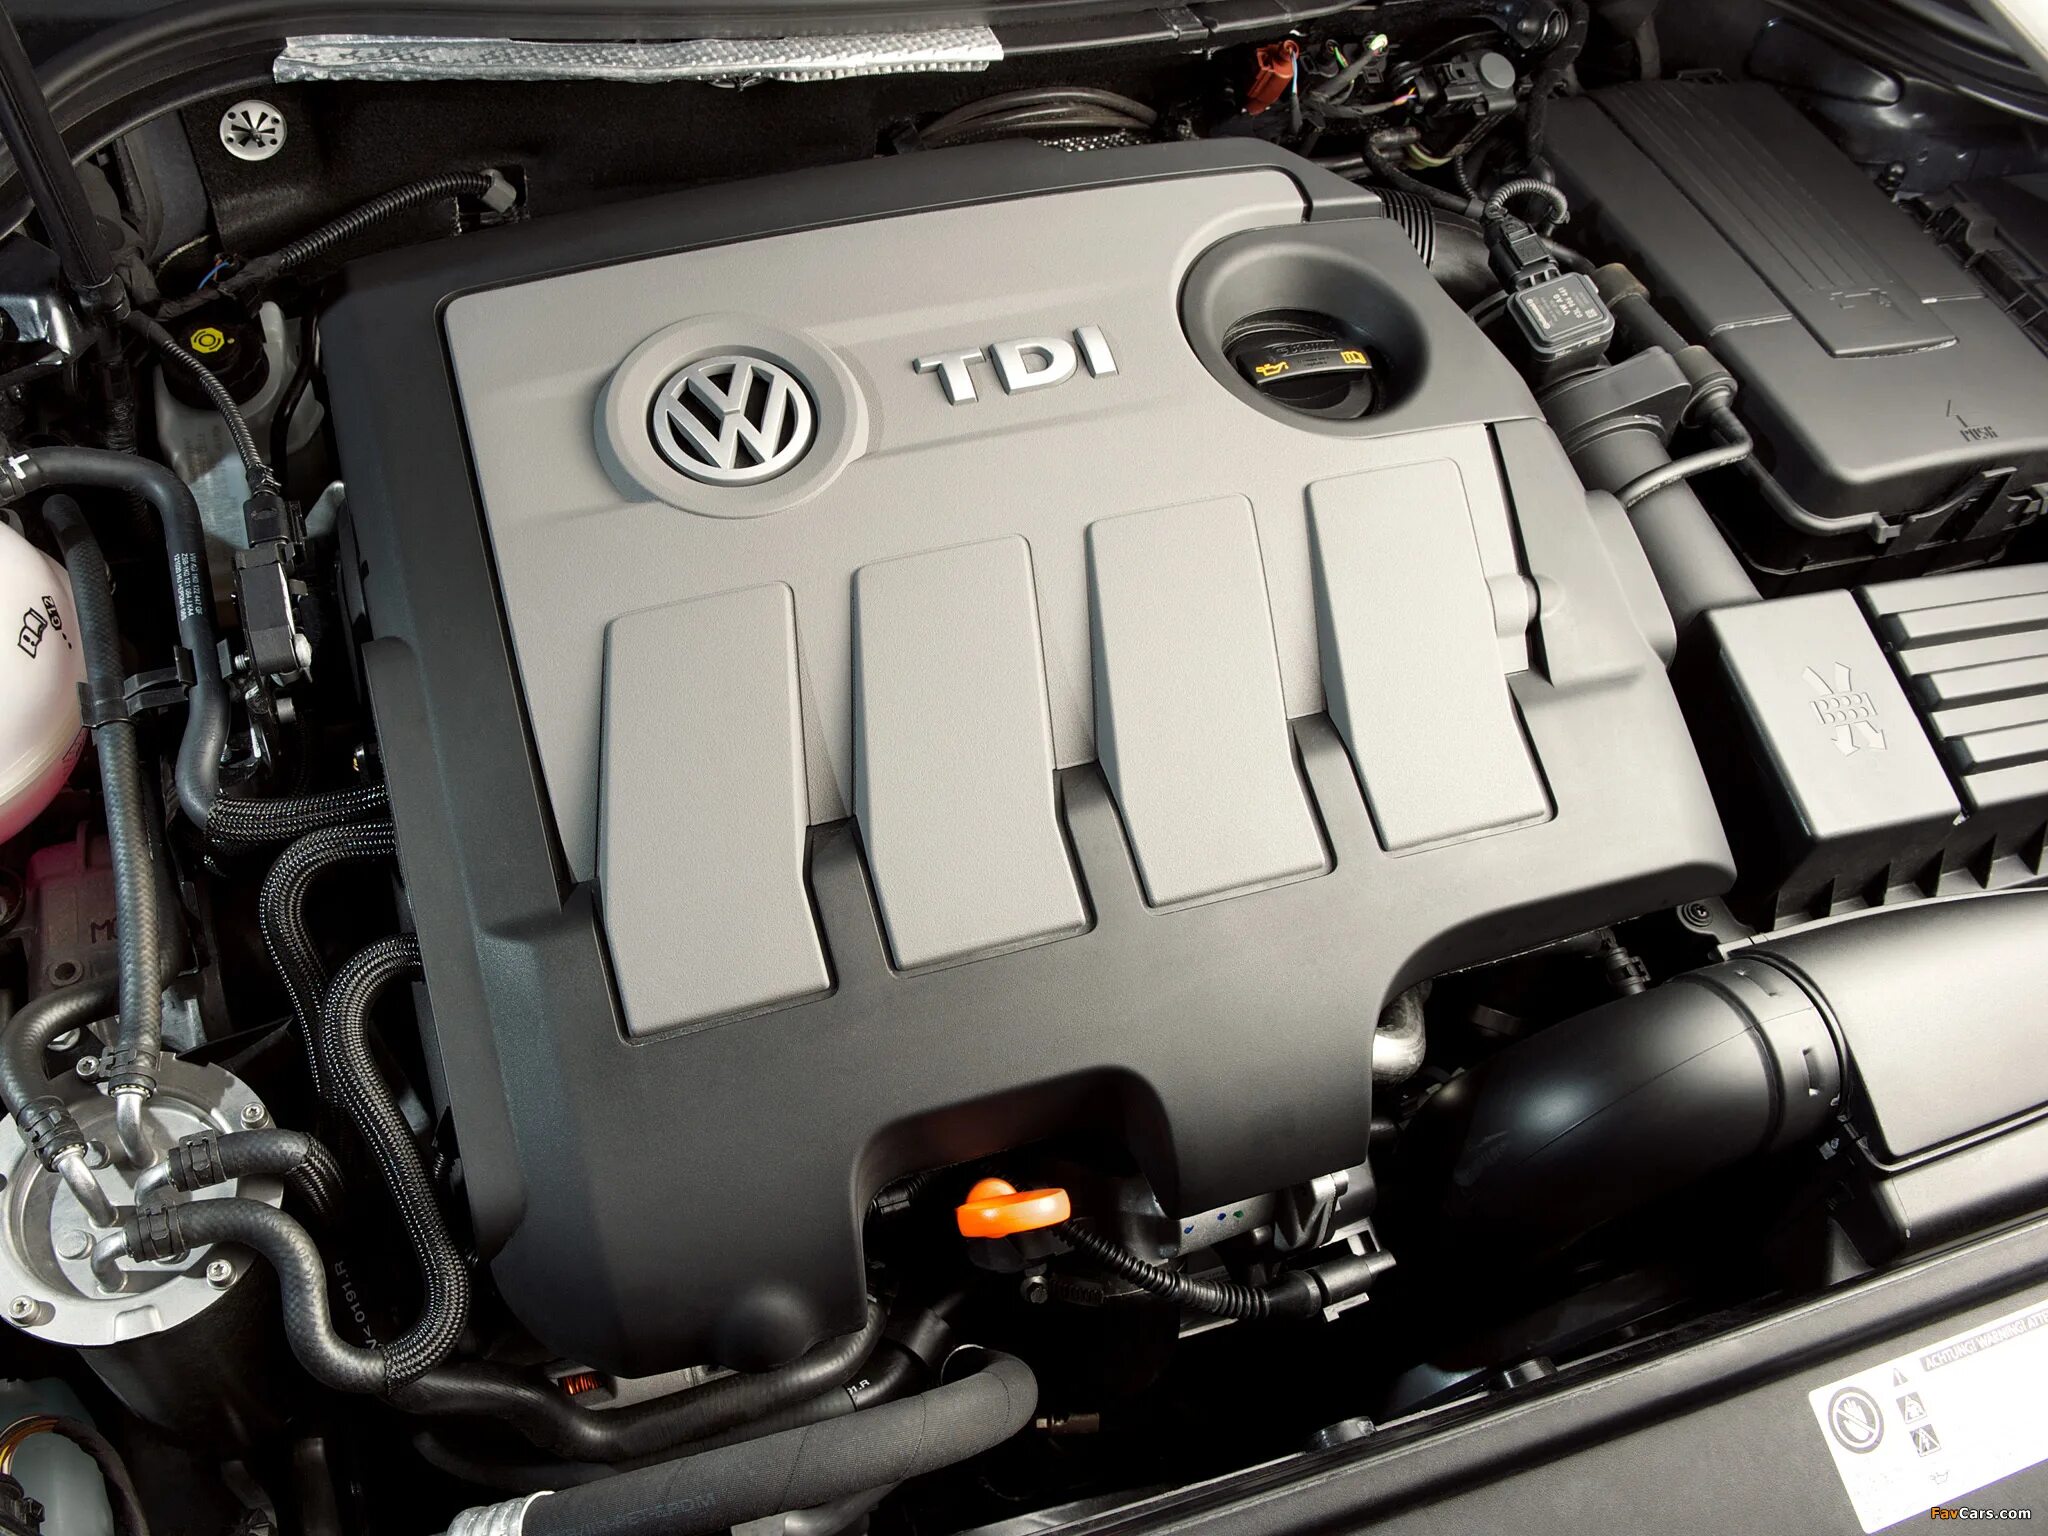 Дизель volkswagen 2.0. Volkswagen Passat b6 2.0 TDI моторы. Двигатель Пассат б6 2.0. Двигатель Volkswagen Passat b6 дизель 2.0. Двигатель Фольксваген Пассат б6 2.0 FSI.